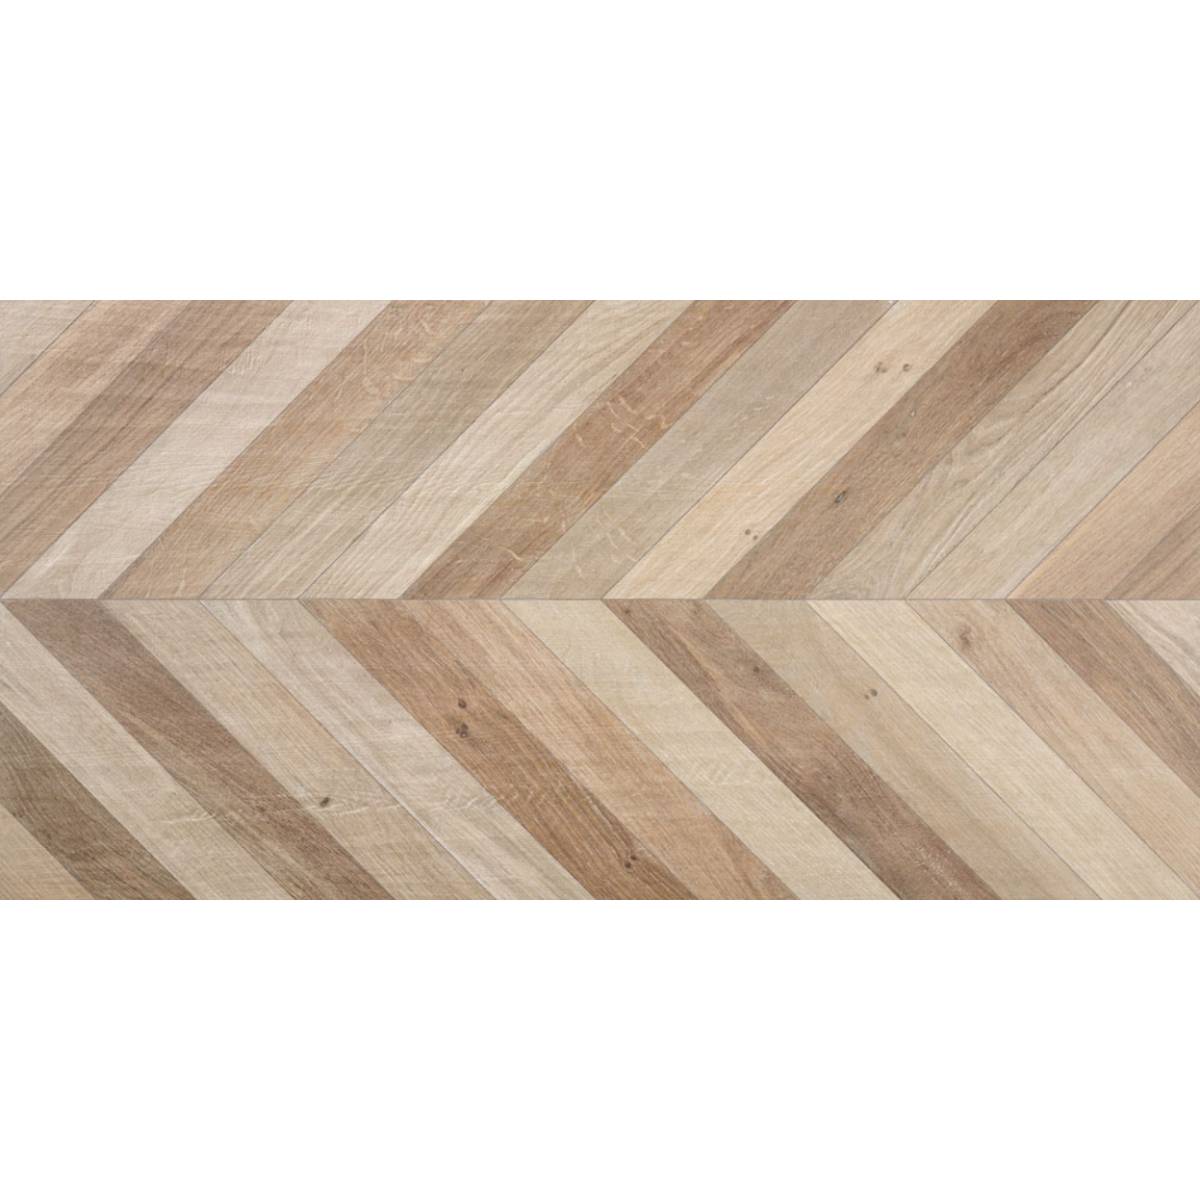 Chevrons Automne 60 x 120cm Rectified Wood Effect Tile - 1.44sqm perbox (12629)